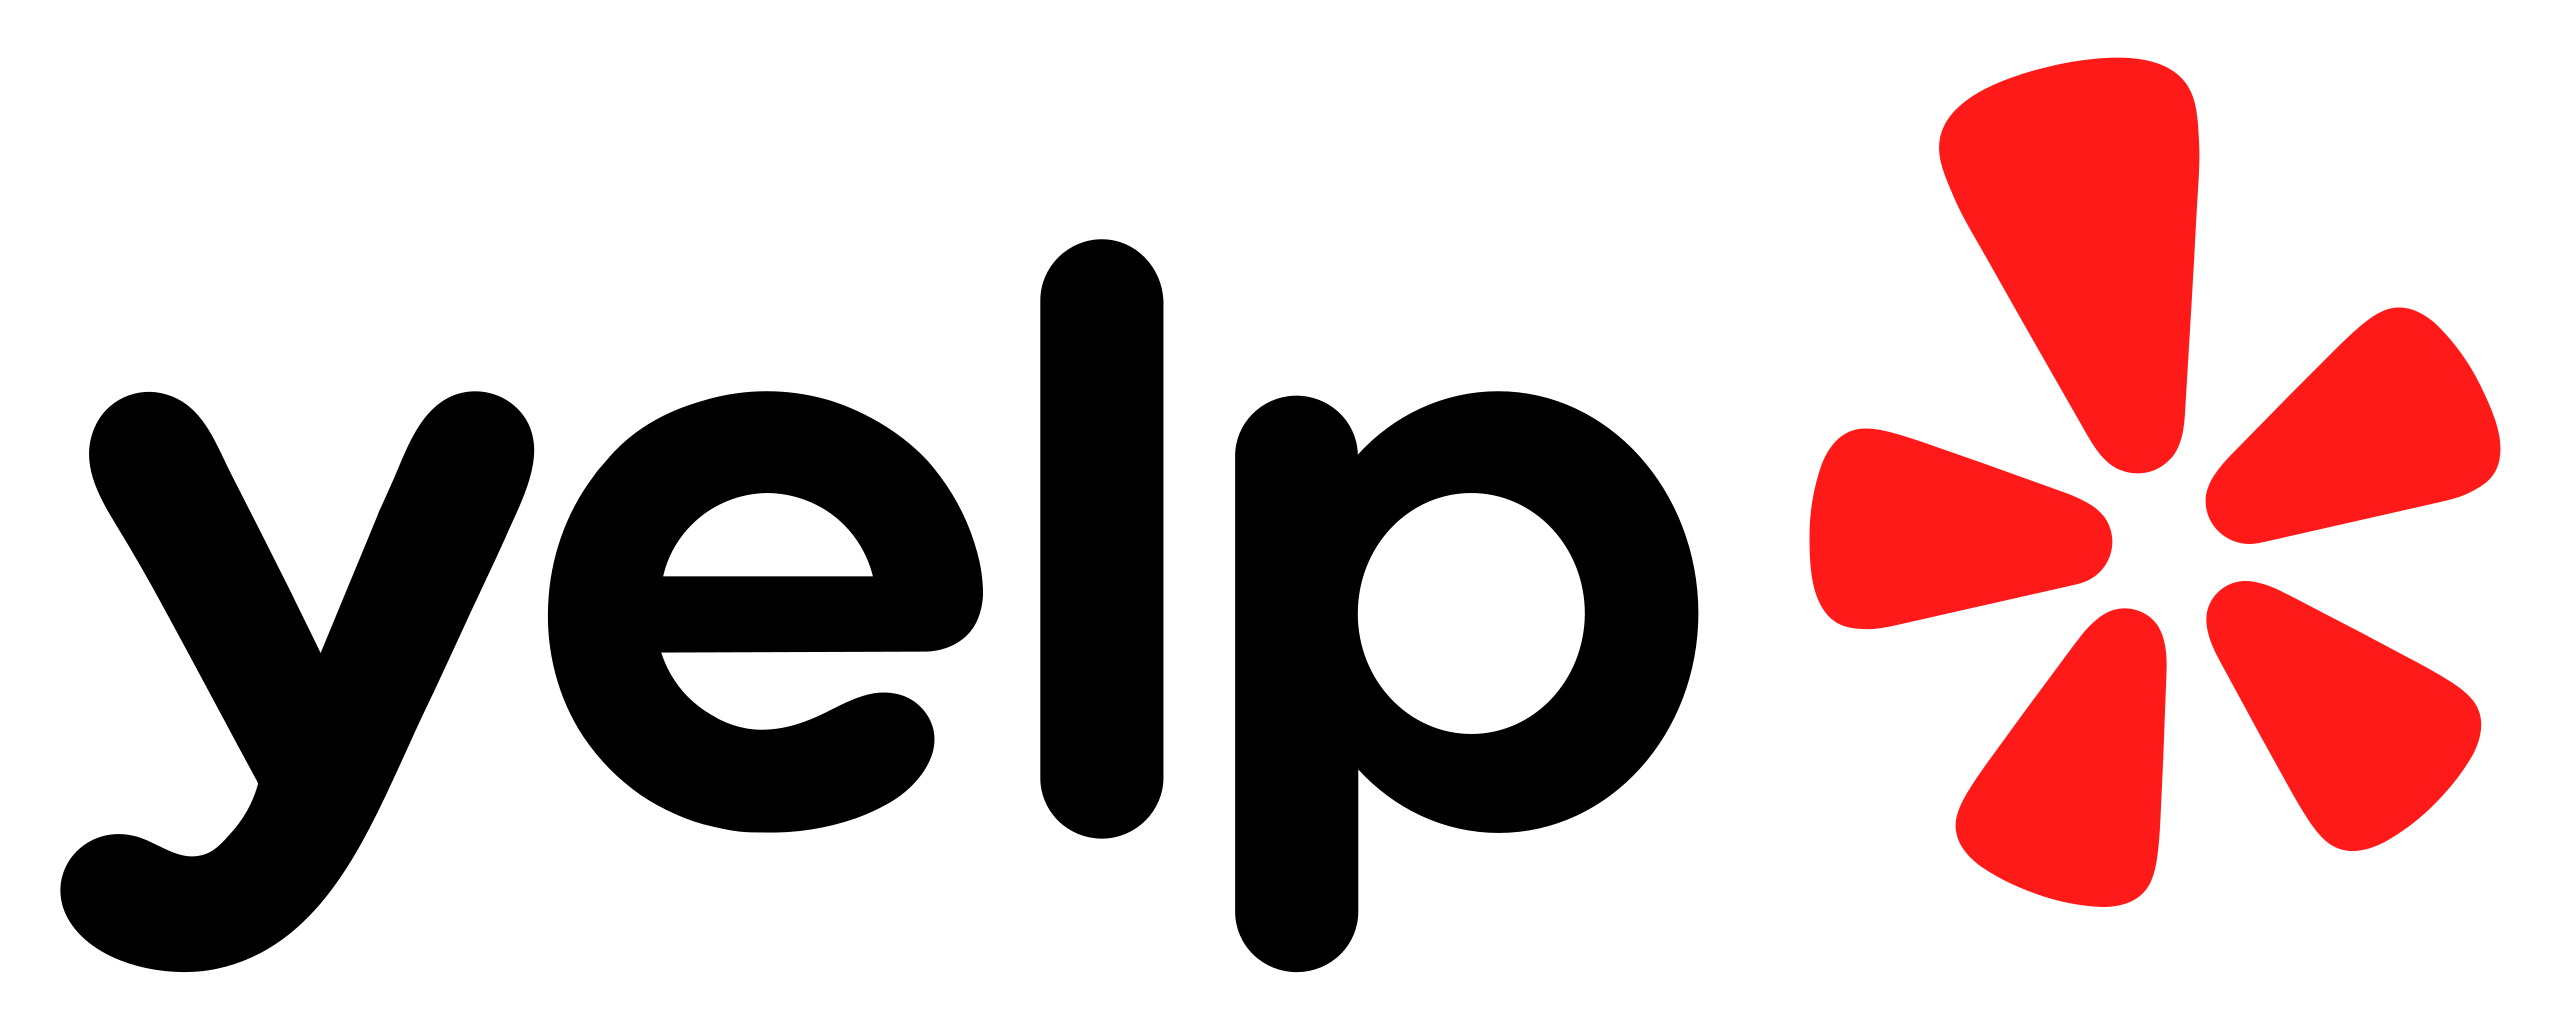 Yelp Logo. Find WestPro on Yelp.